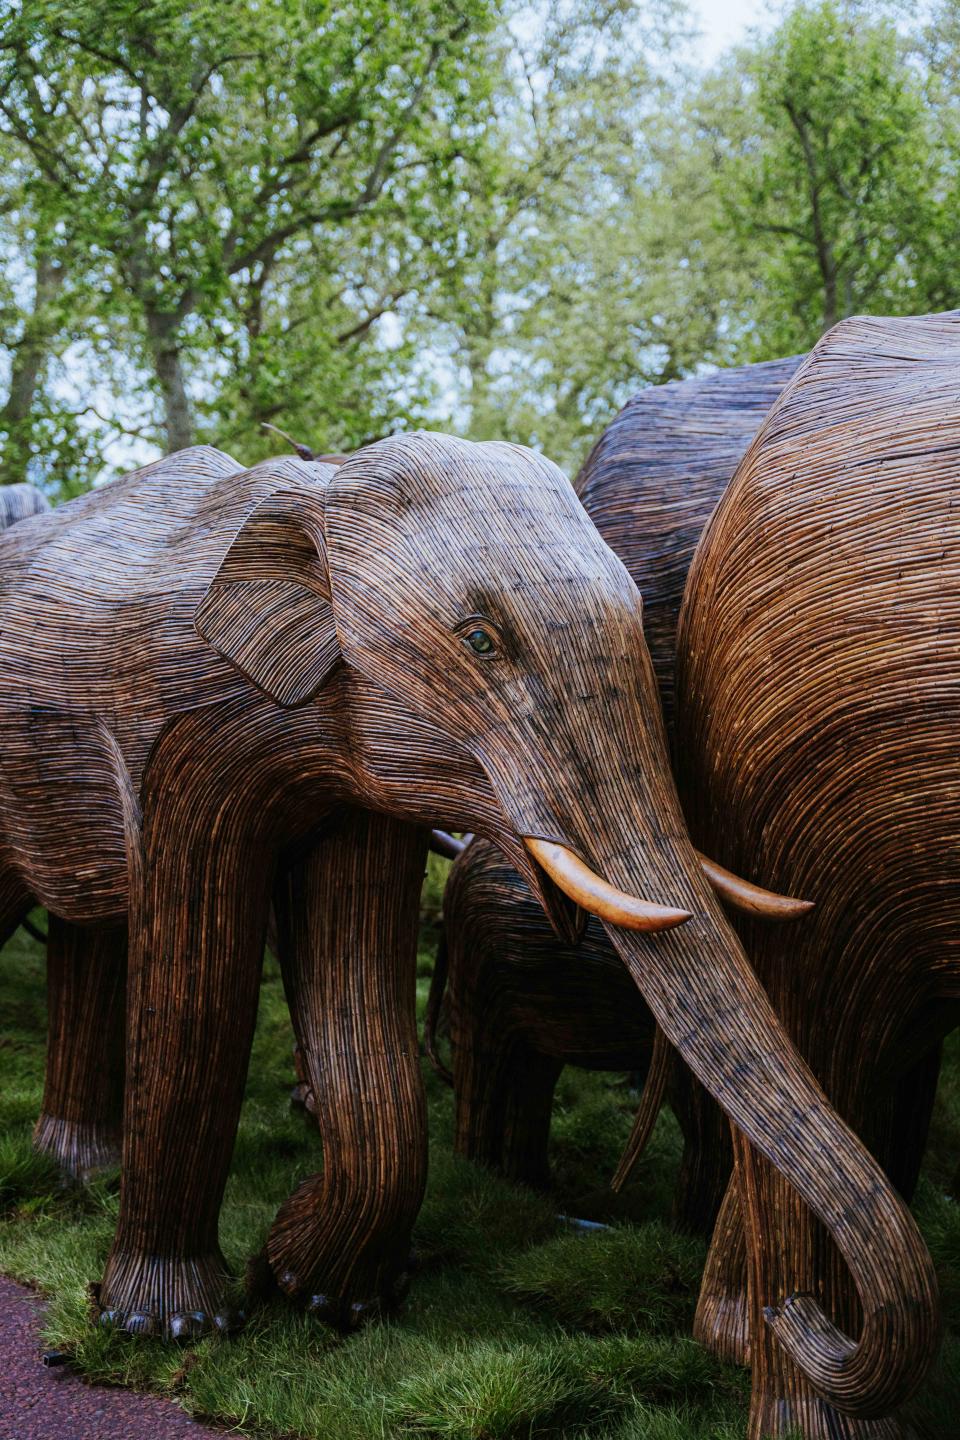 The elephants were created using lantana, an invasive weed (Grant Walker/PA)